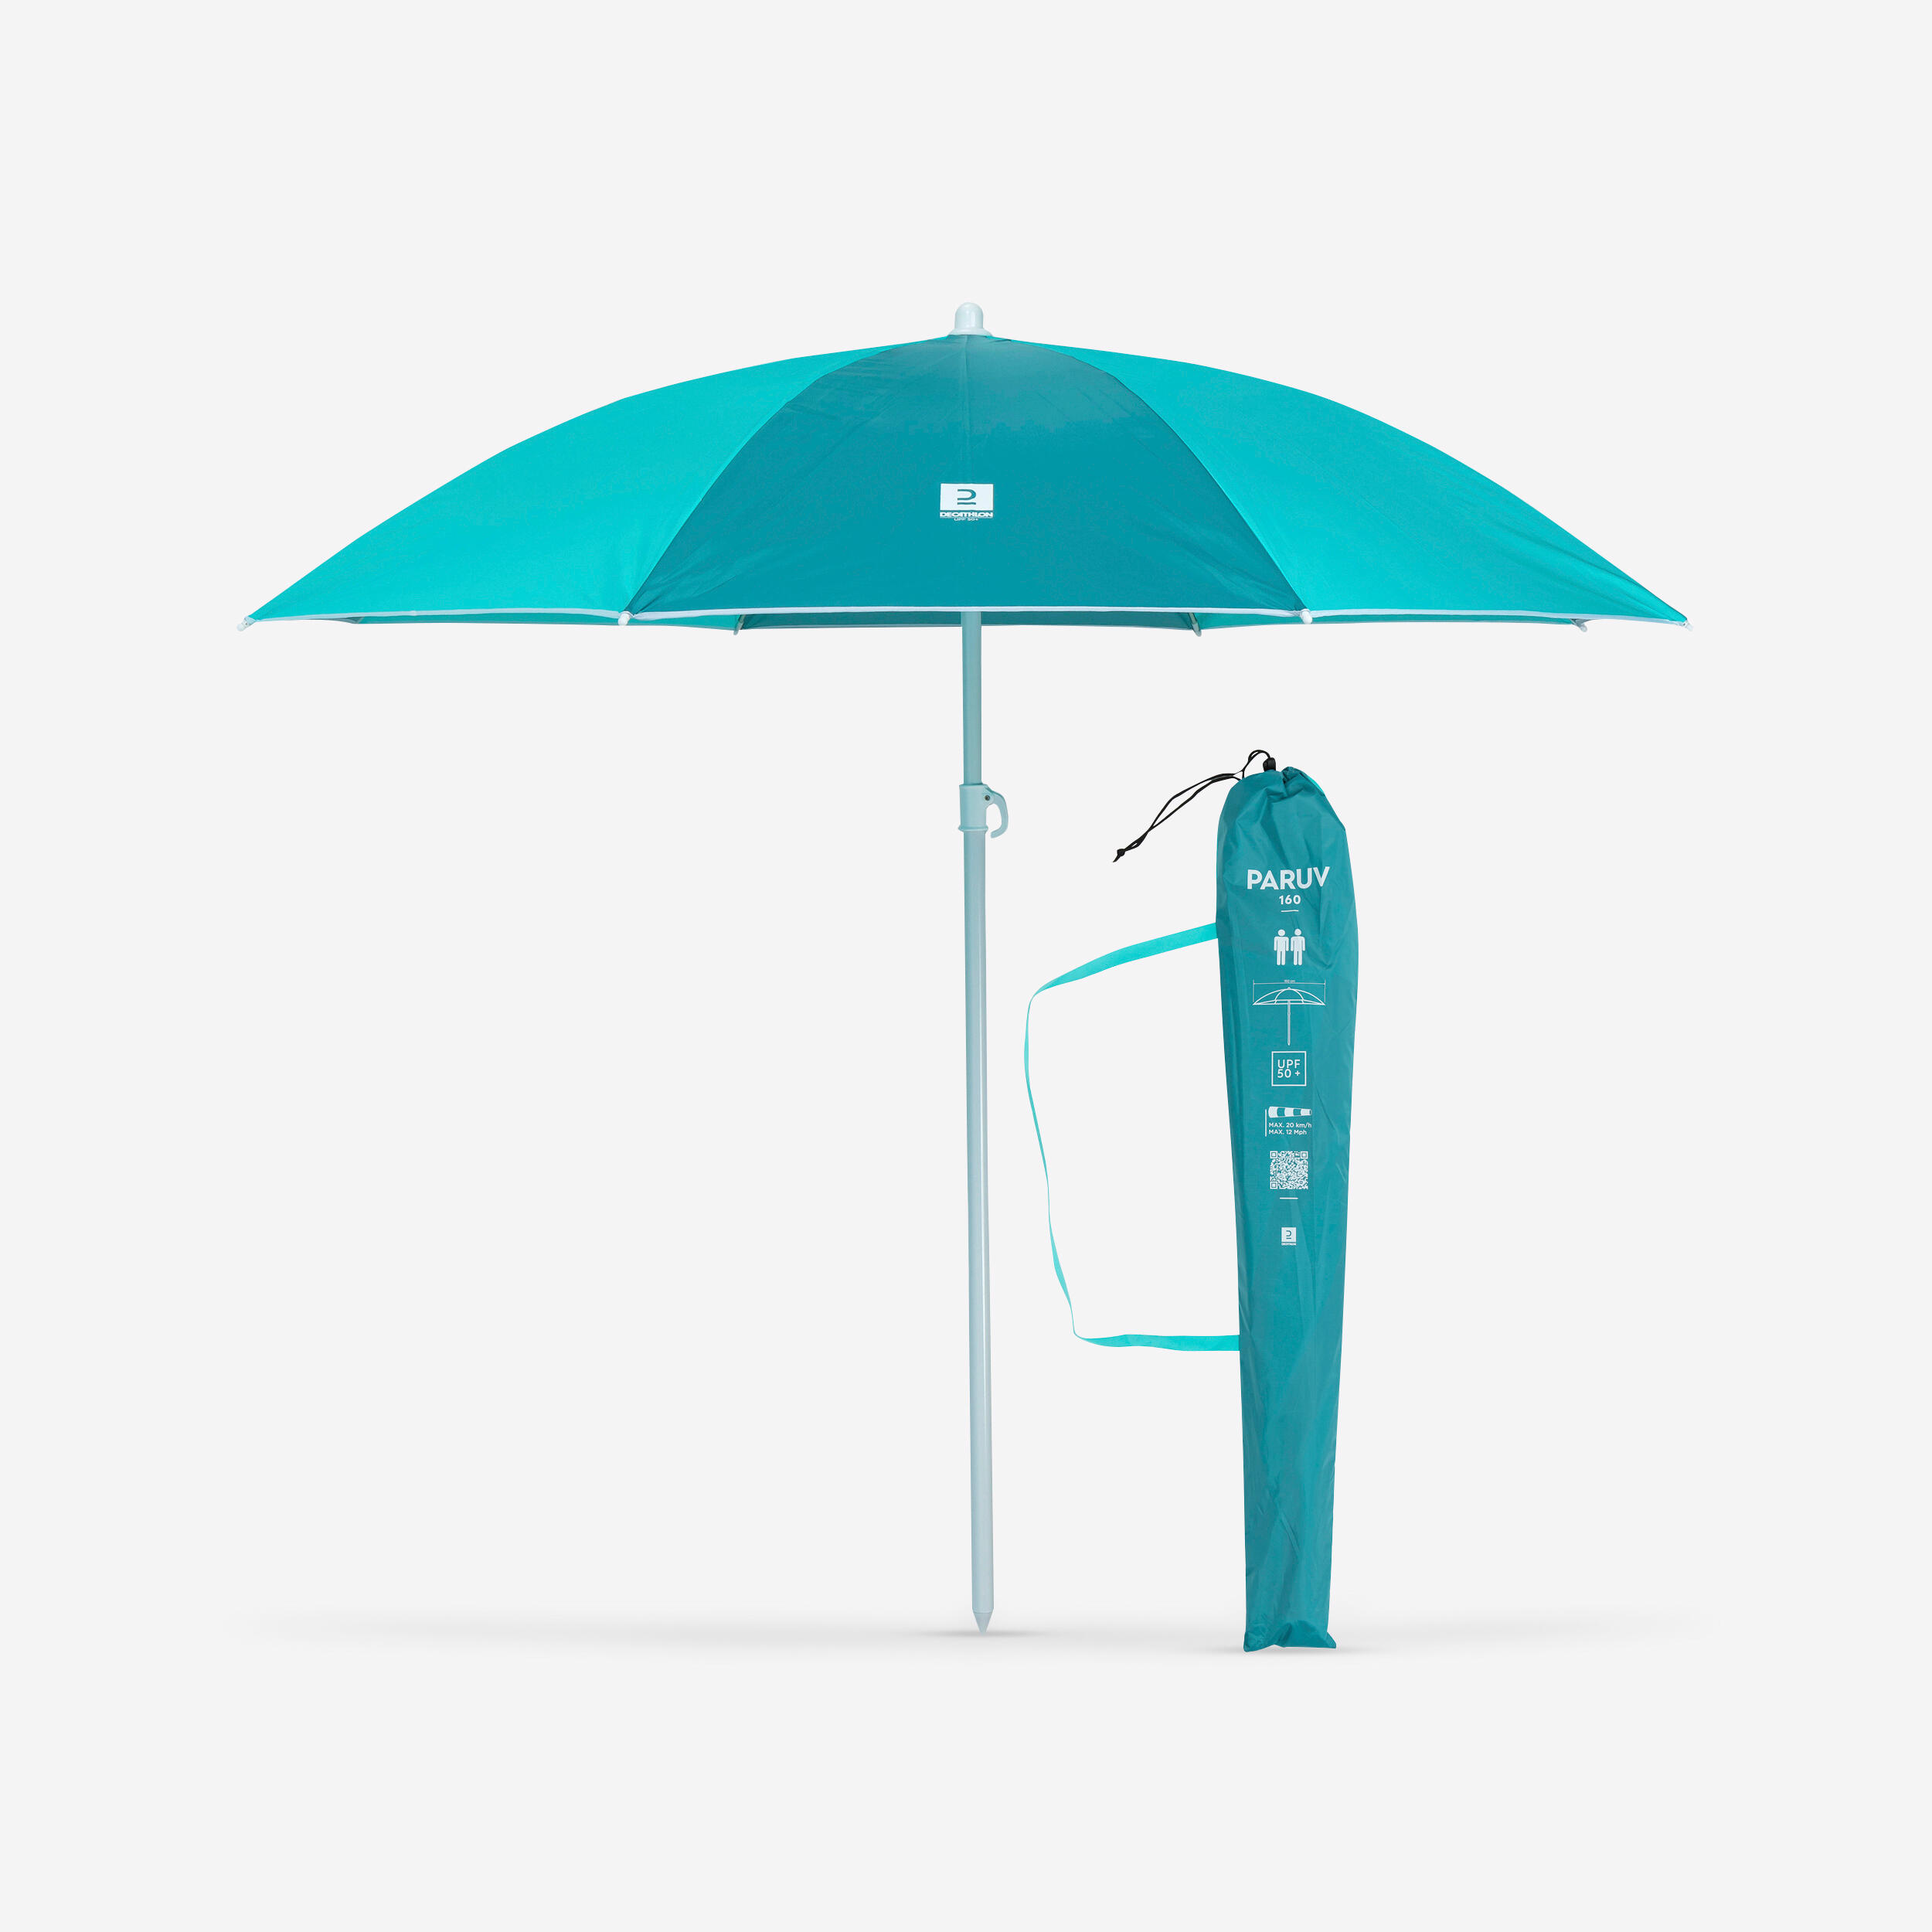 Umbrela De Plaja Paruv 160 Upf 50+ 2 Locuri - Albastru Verde